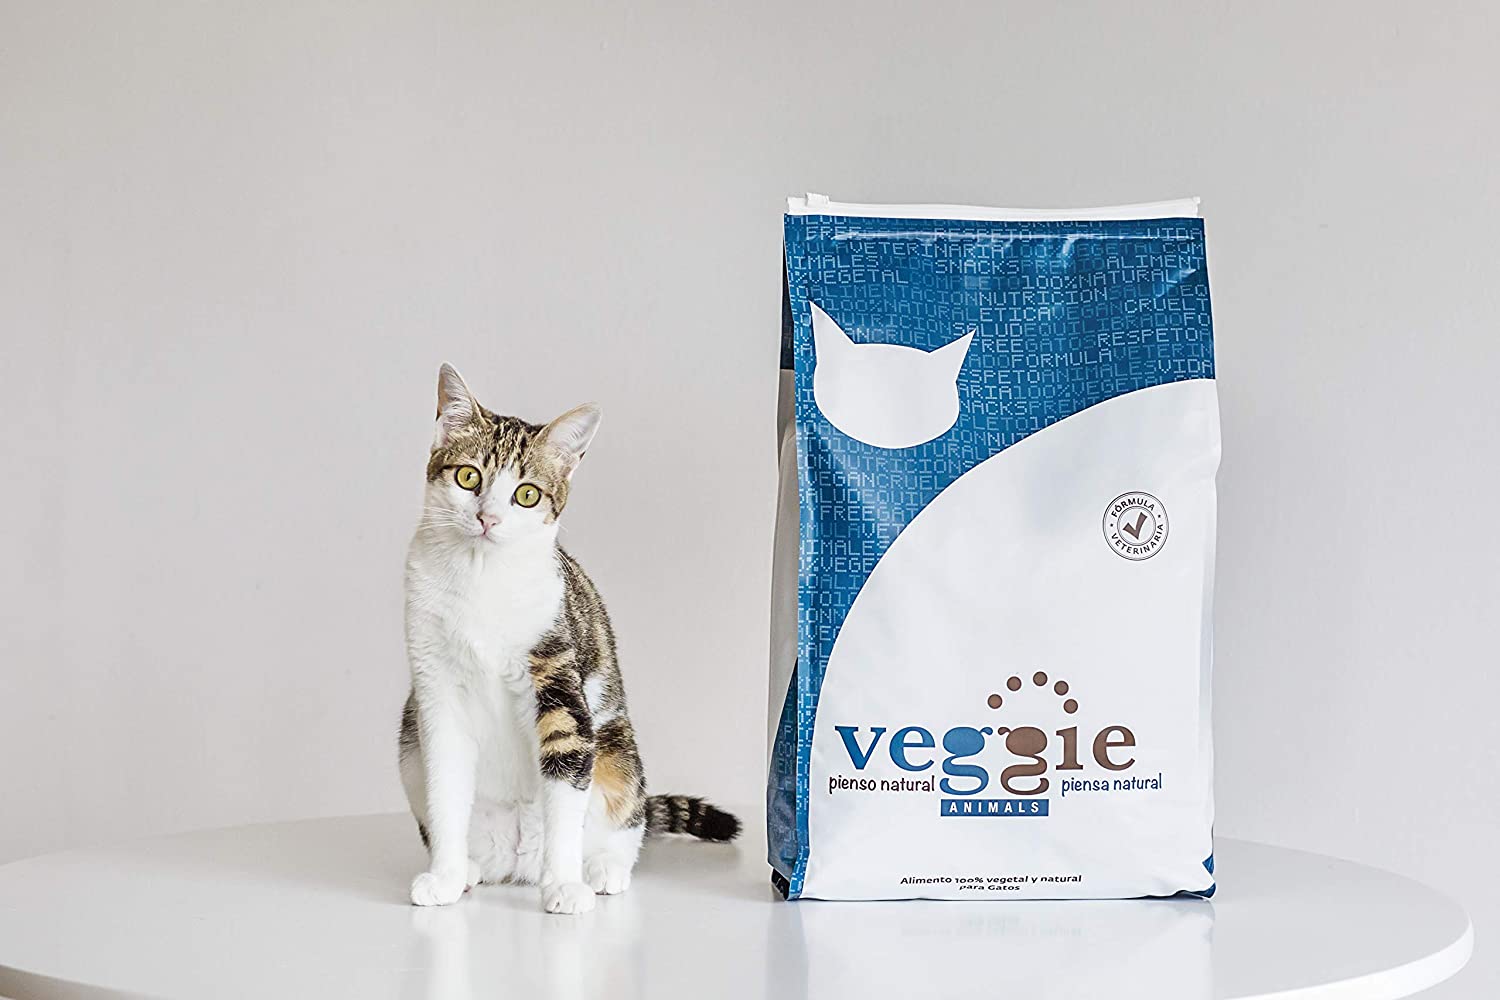  VeggieAnimals - Pienso 100% Vegetal para Gatos, 2 kg 